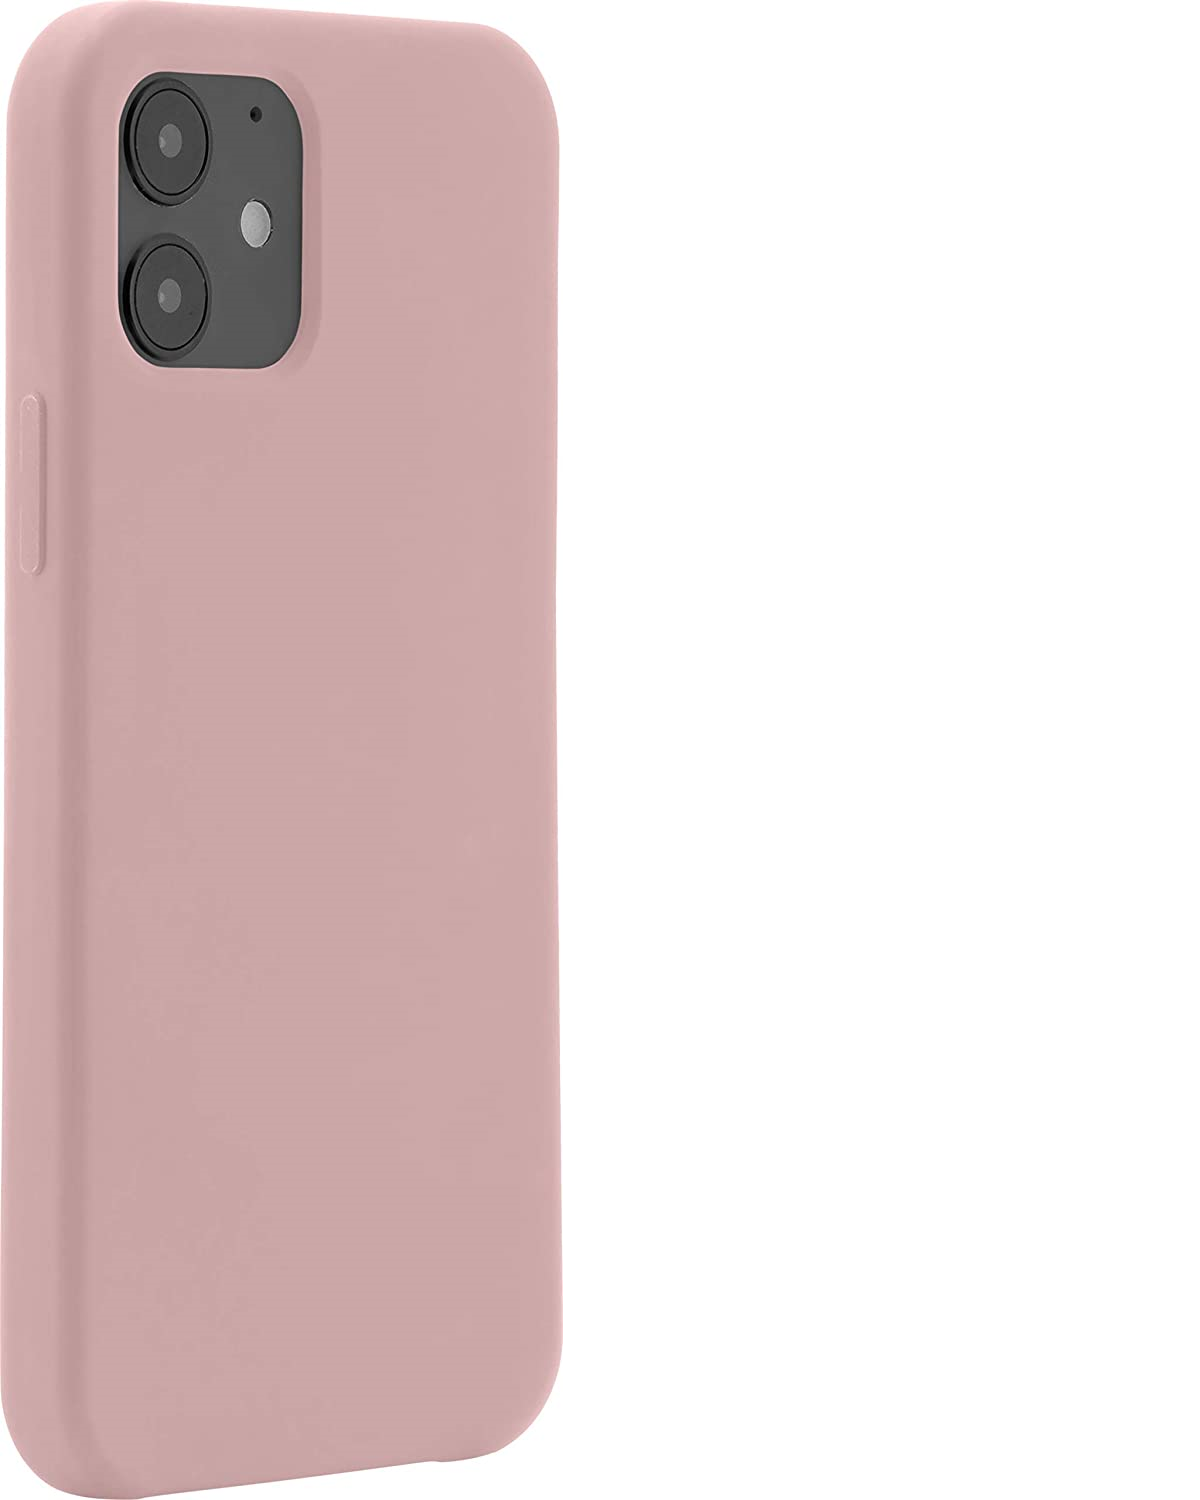 JT BERLIN Steglitz, iPhone Pink mini, Handyhülle Apple, Backcover, 12 Sand